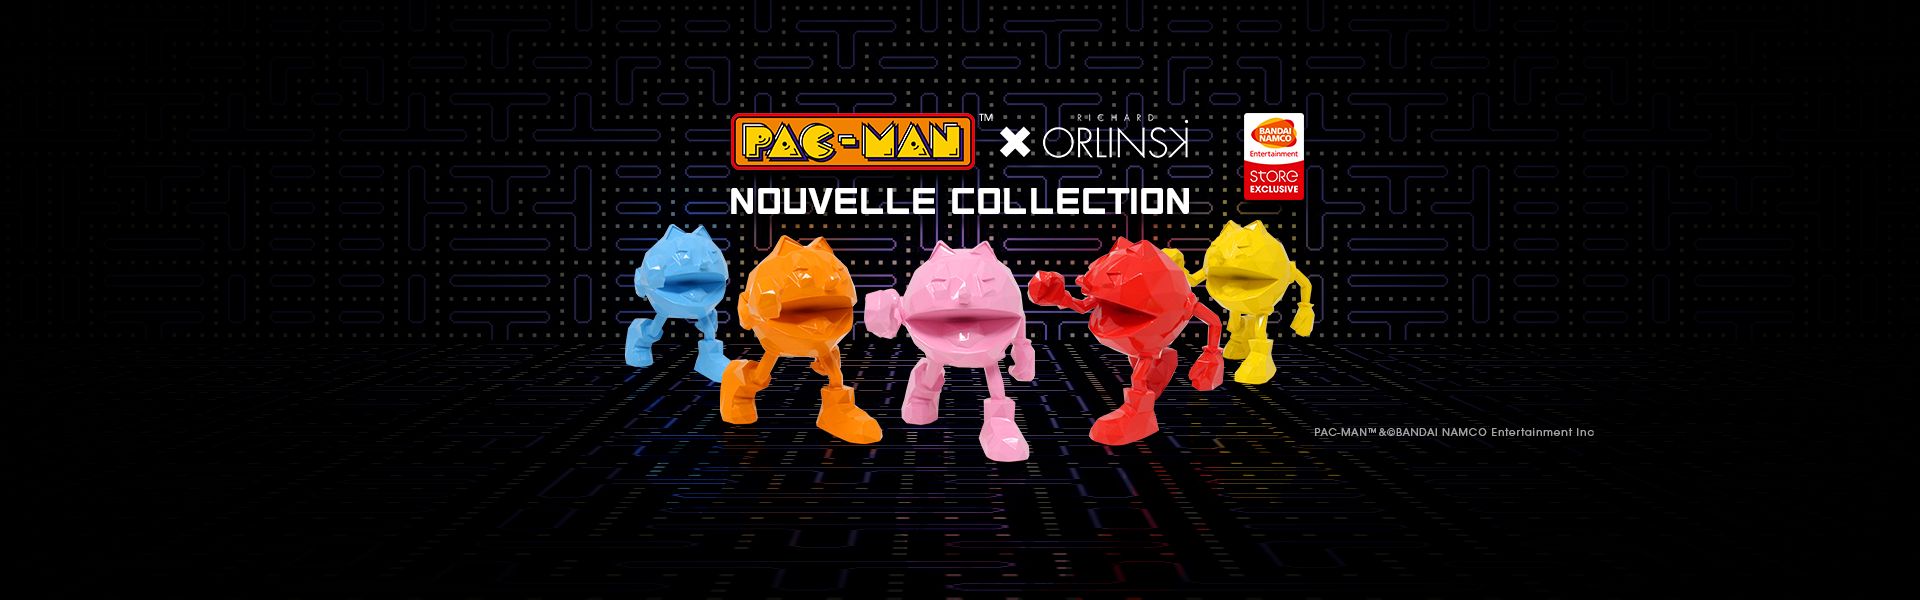 PAC-MAN x ORLINSKI : Nouvelle Collection